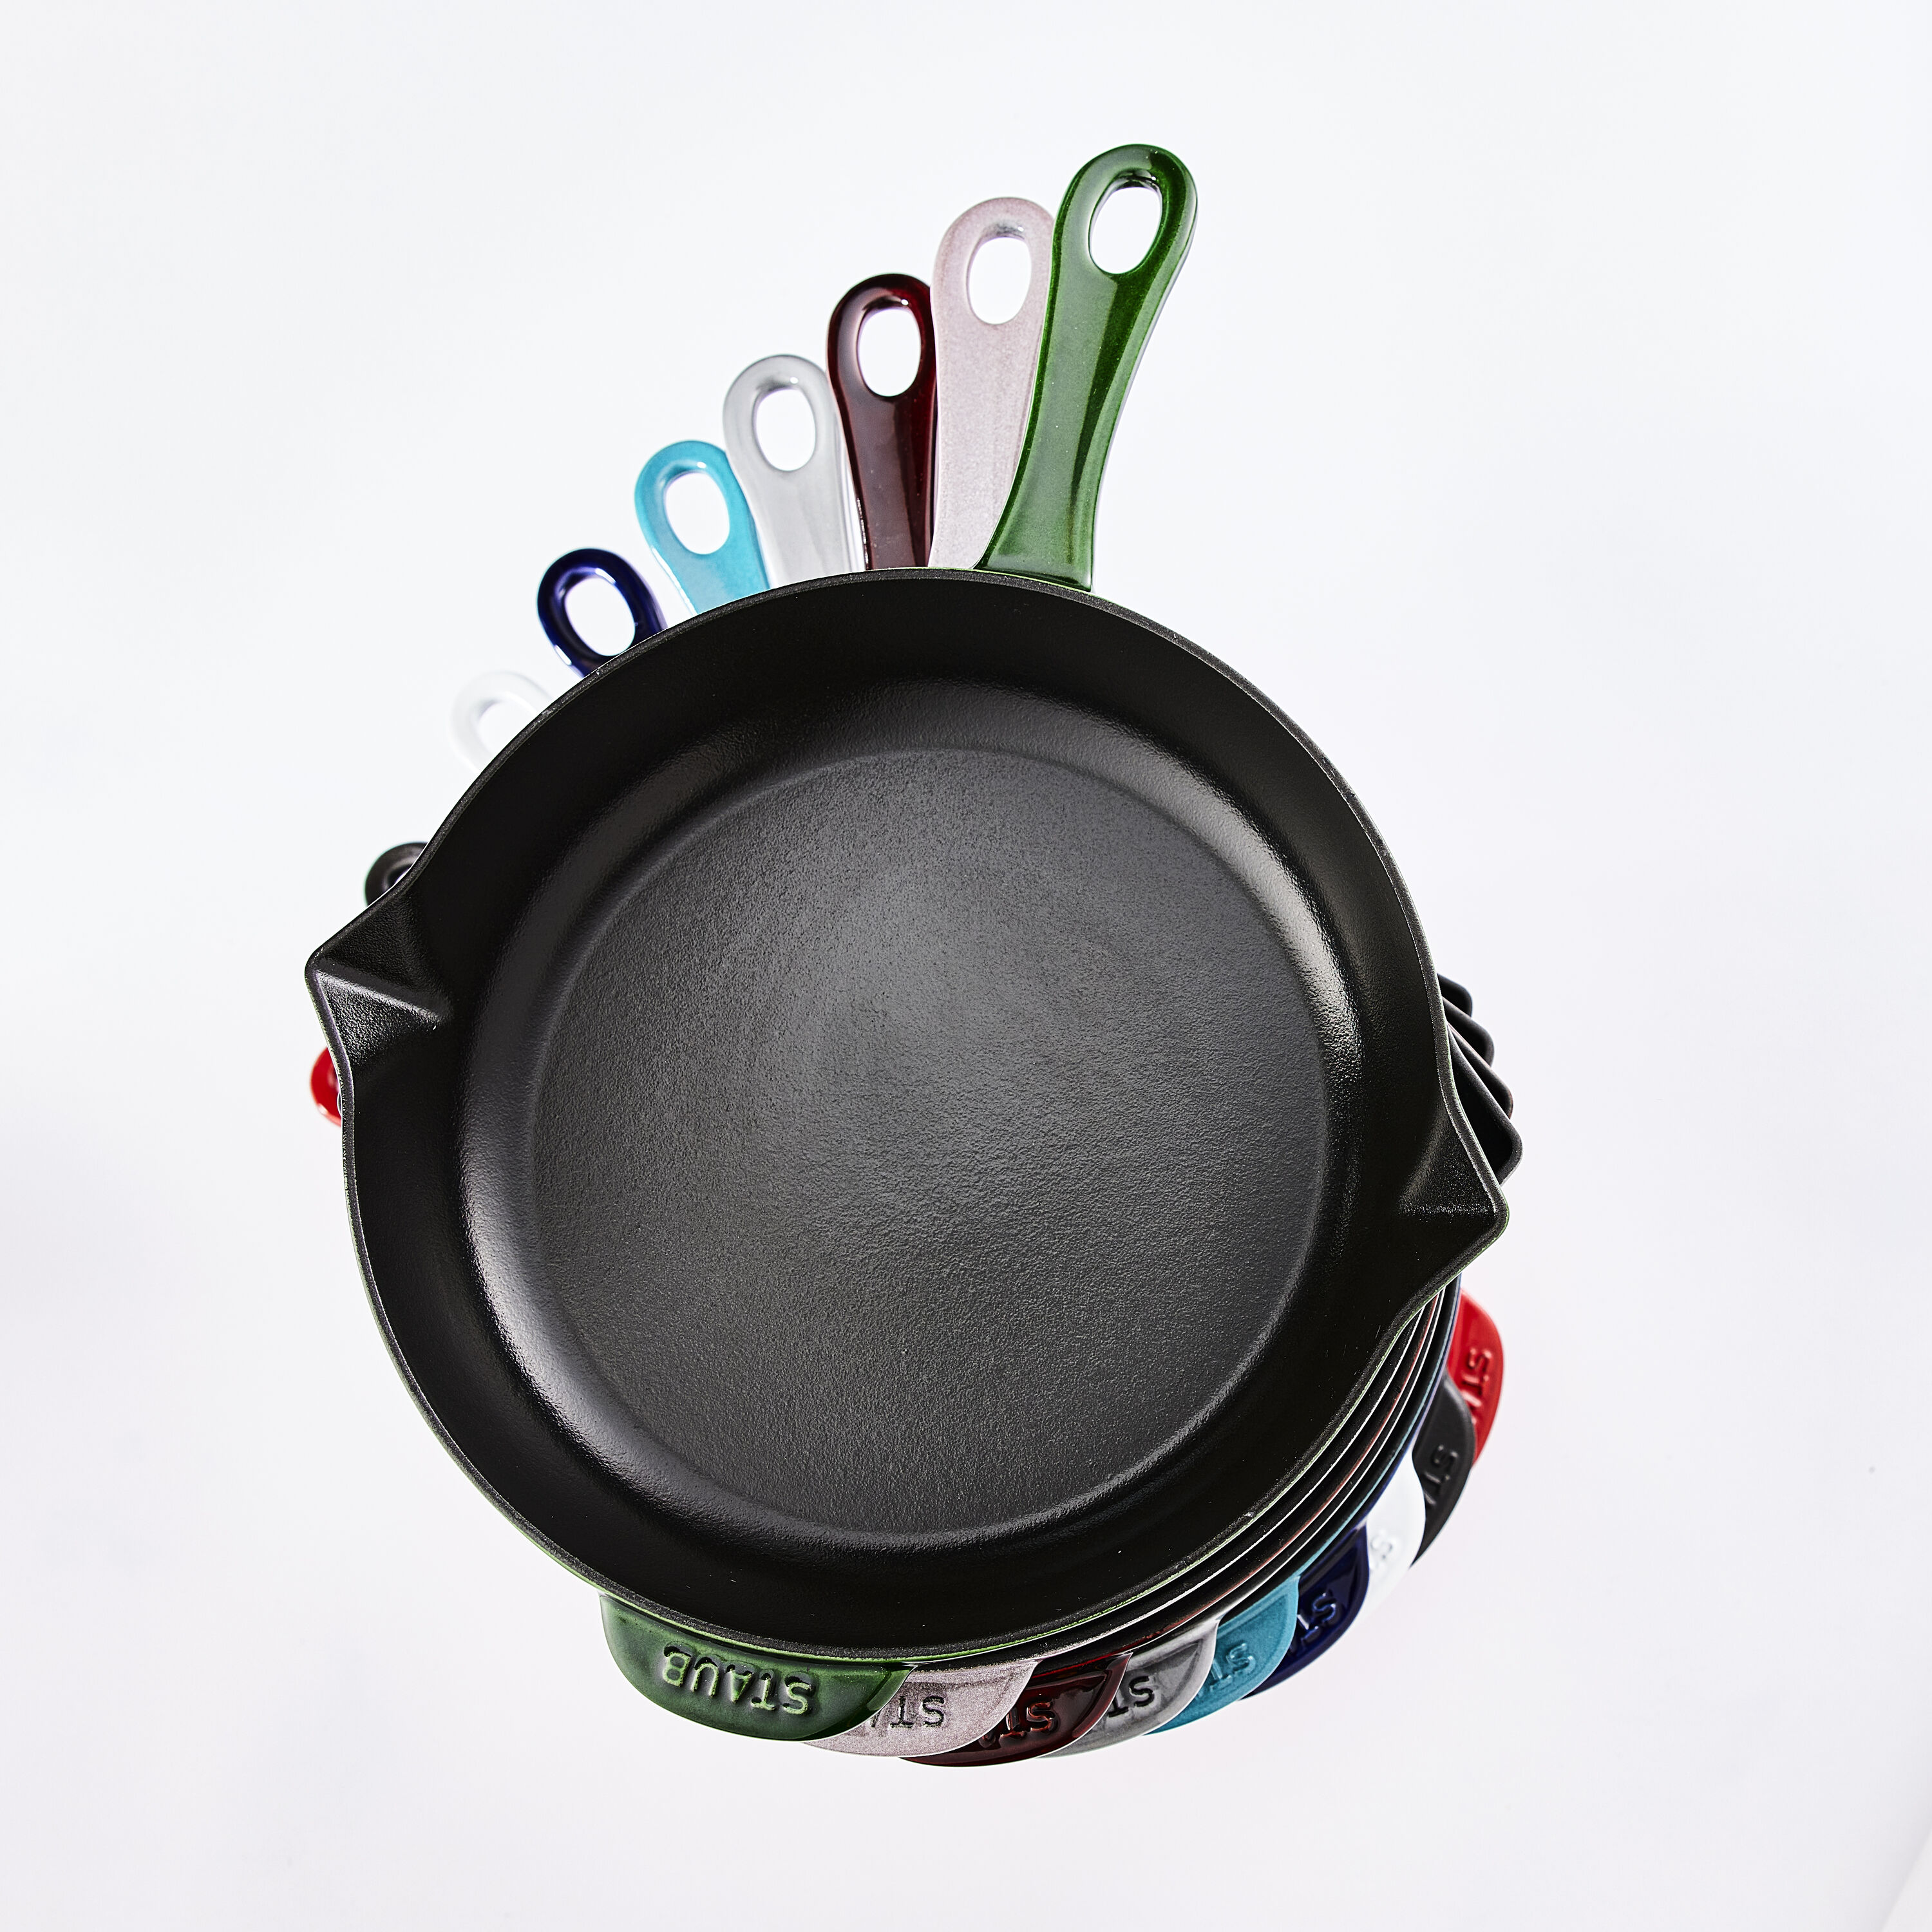 Staub - Cast Iron Frying Pan, Black